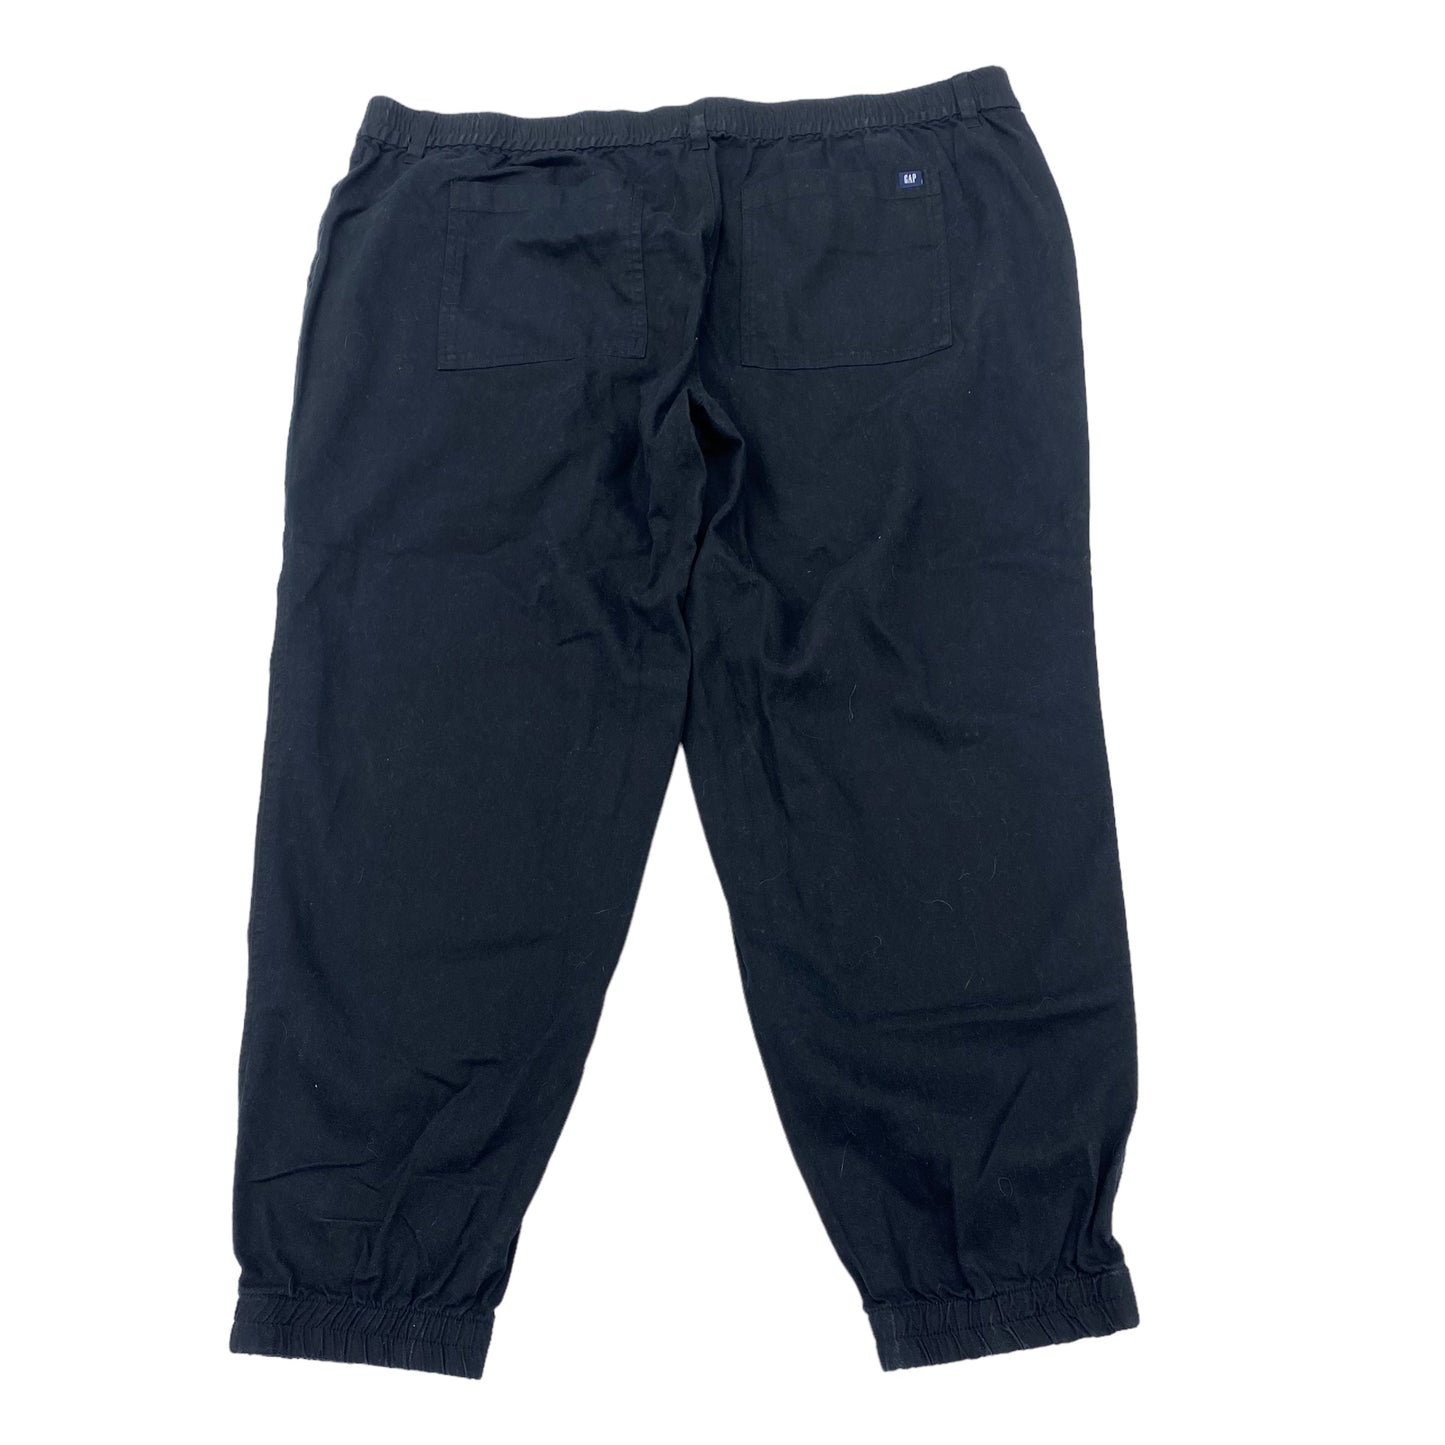 Pants Joggers By Gap  Size: Xxl